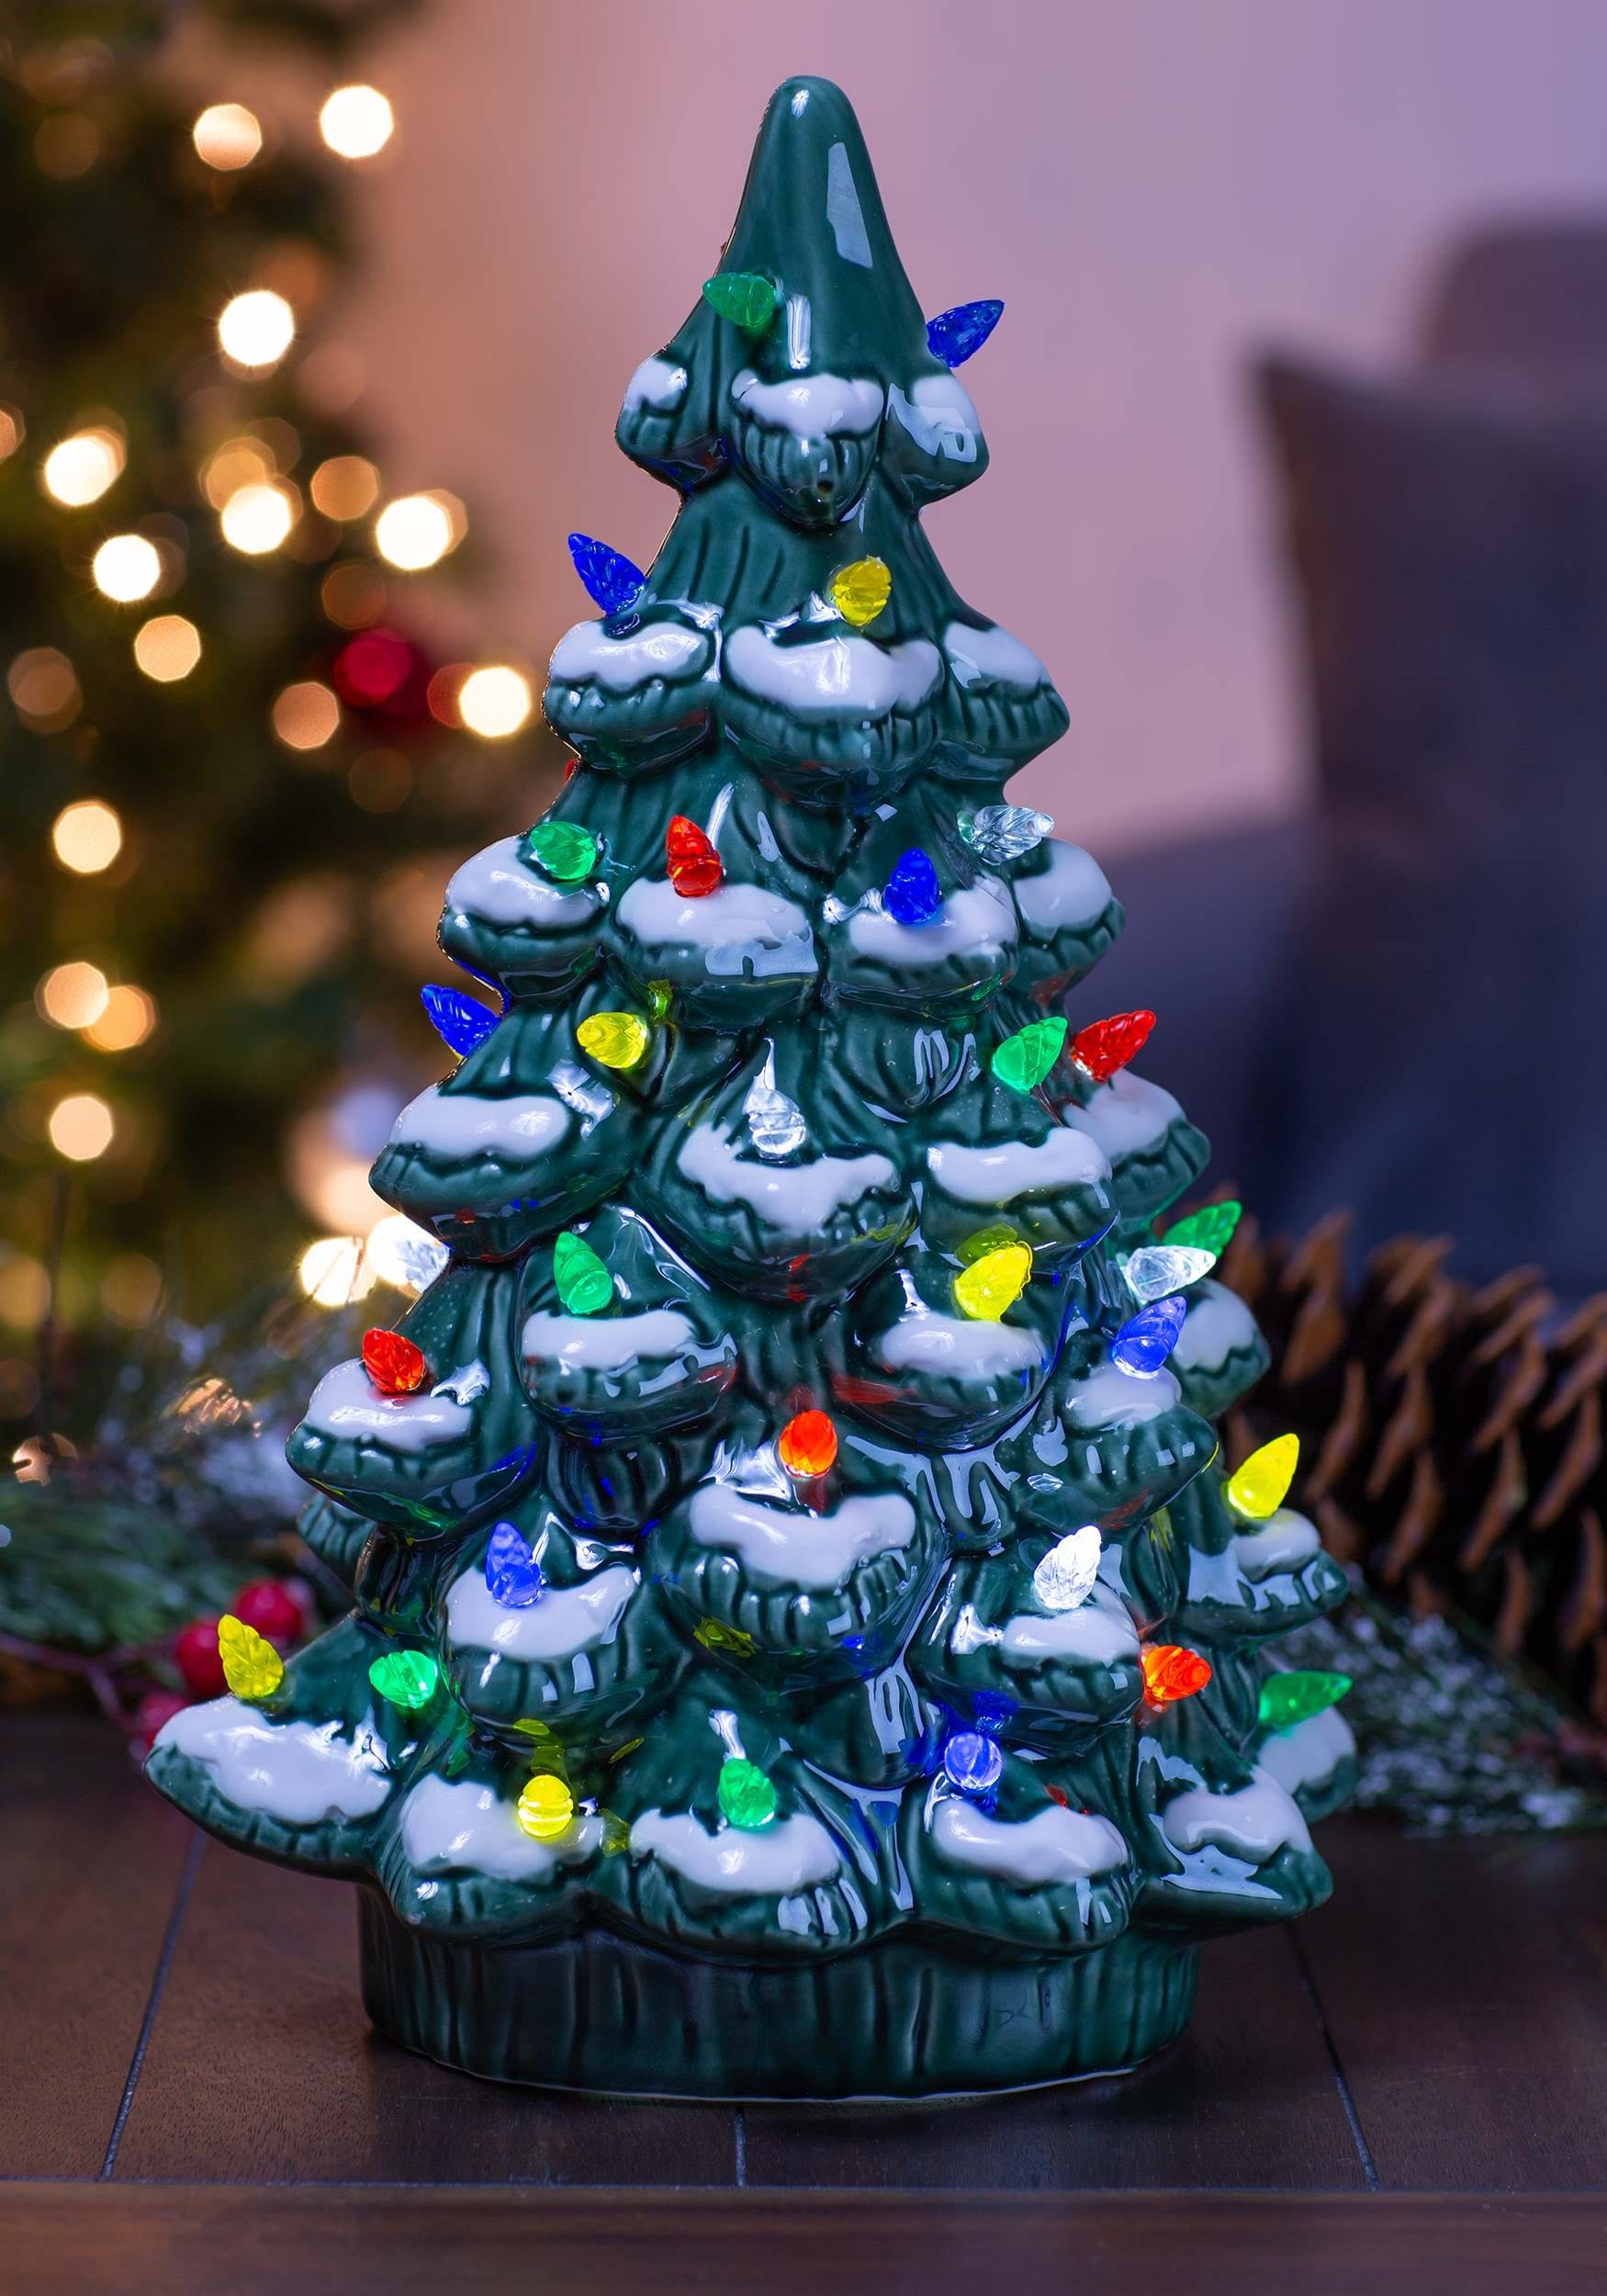 14 Inch Light Up Ceramic Christmas Tree